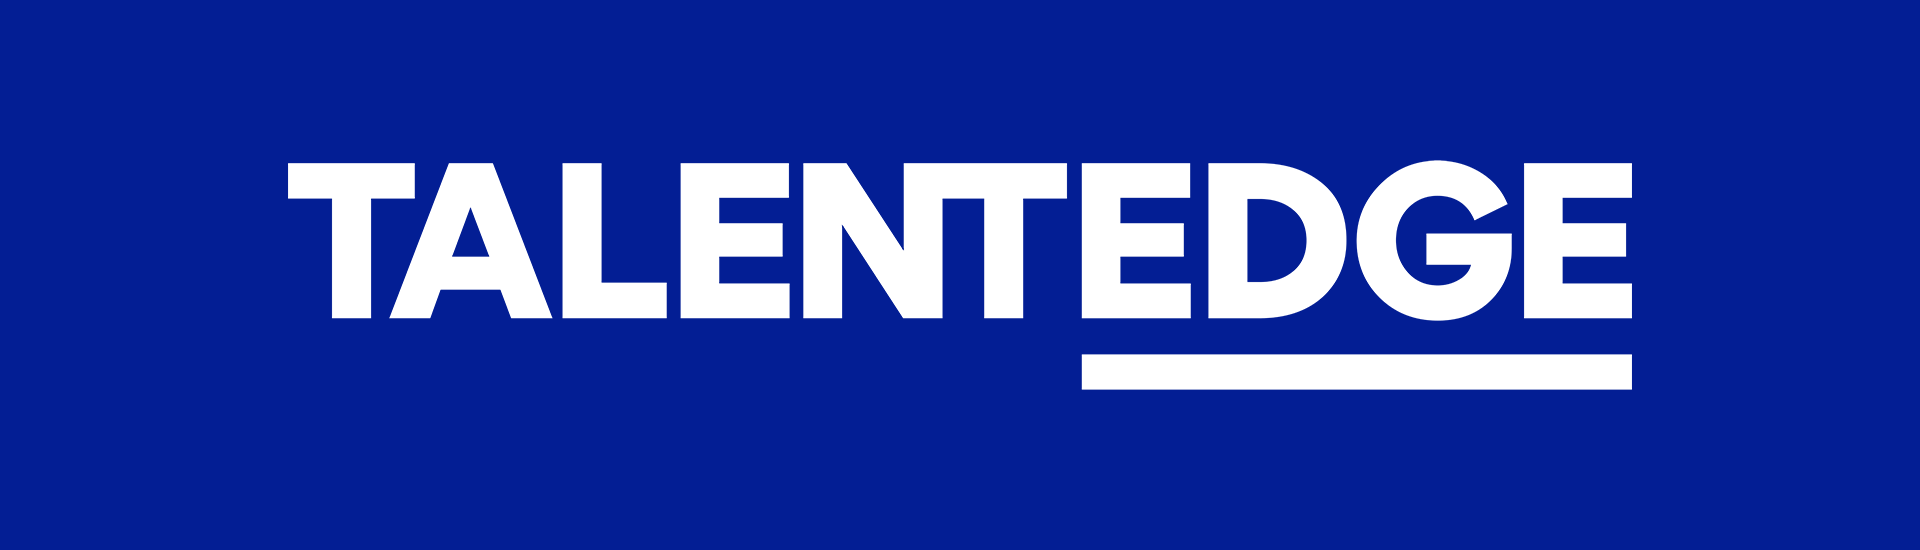 talentedge logo